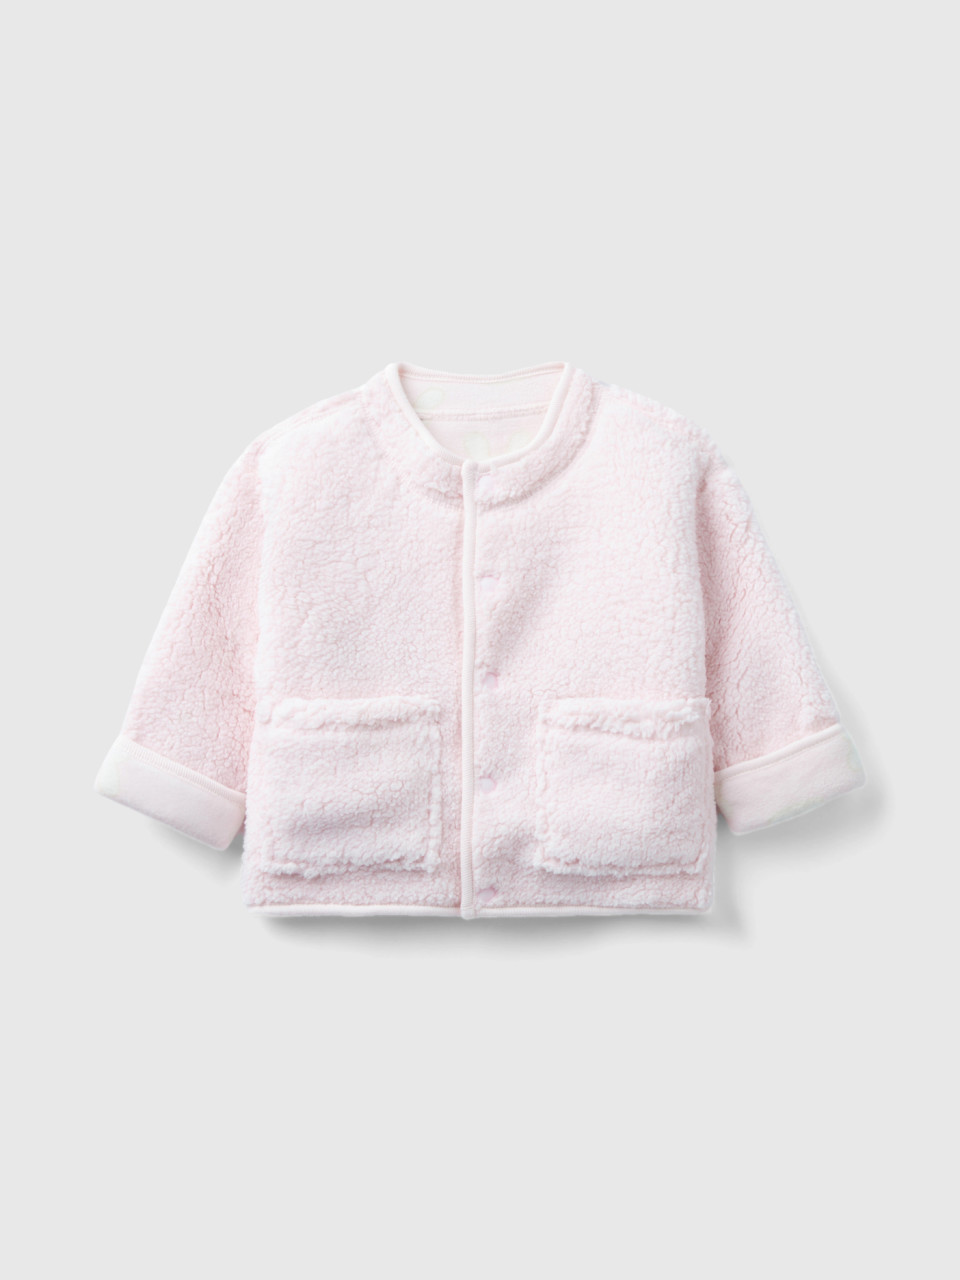 Benetton, Reversible Jacket With Bunnies, Soft Pink, Kids